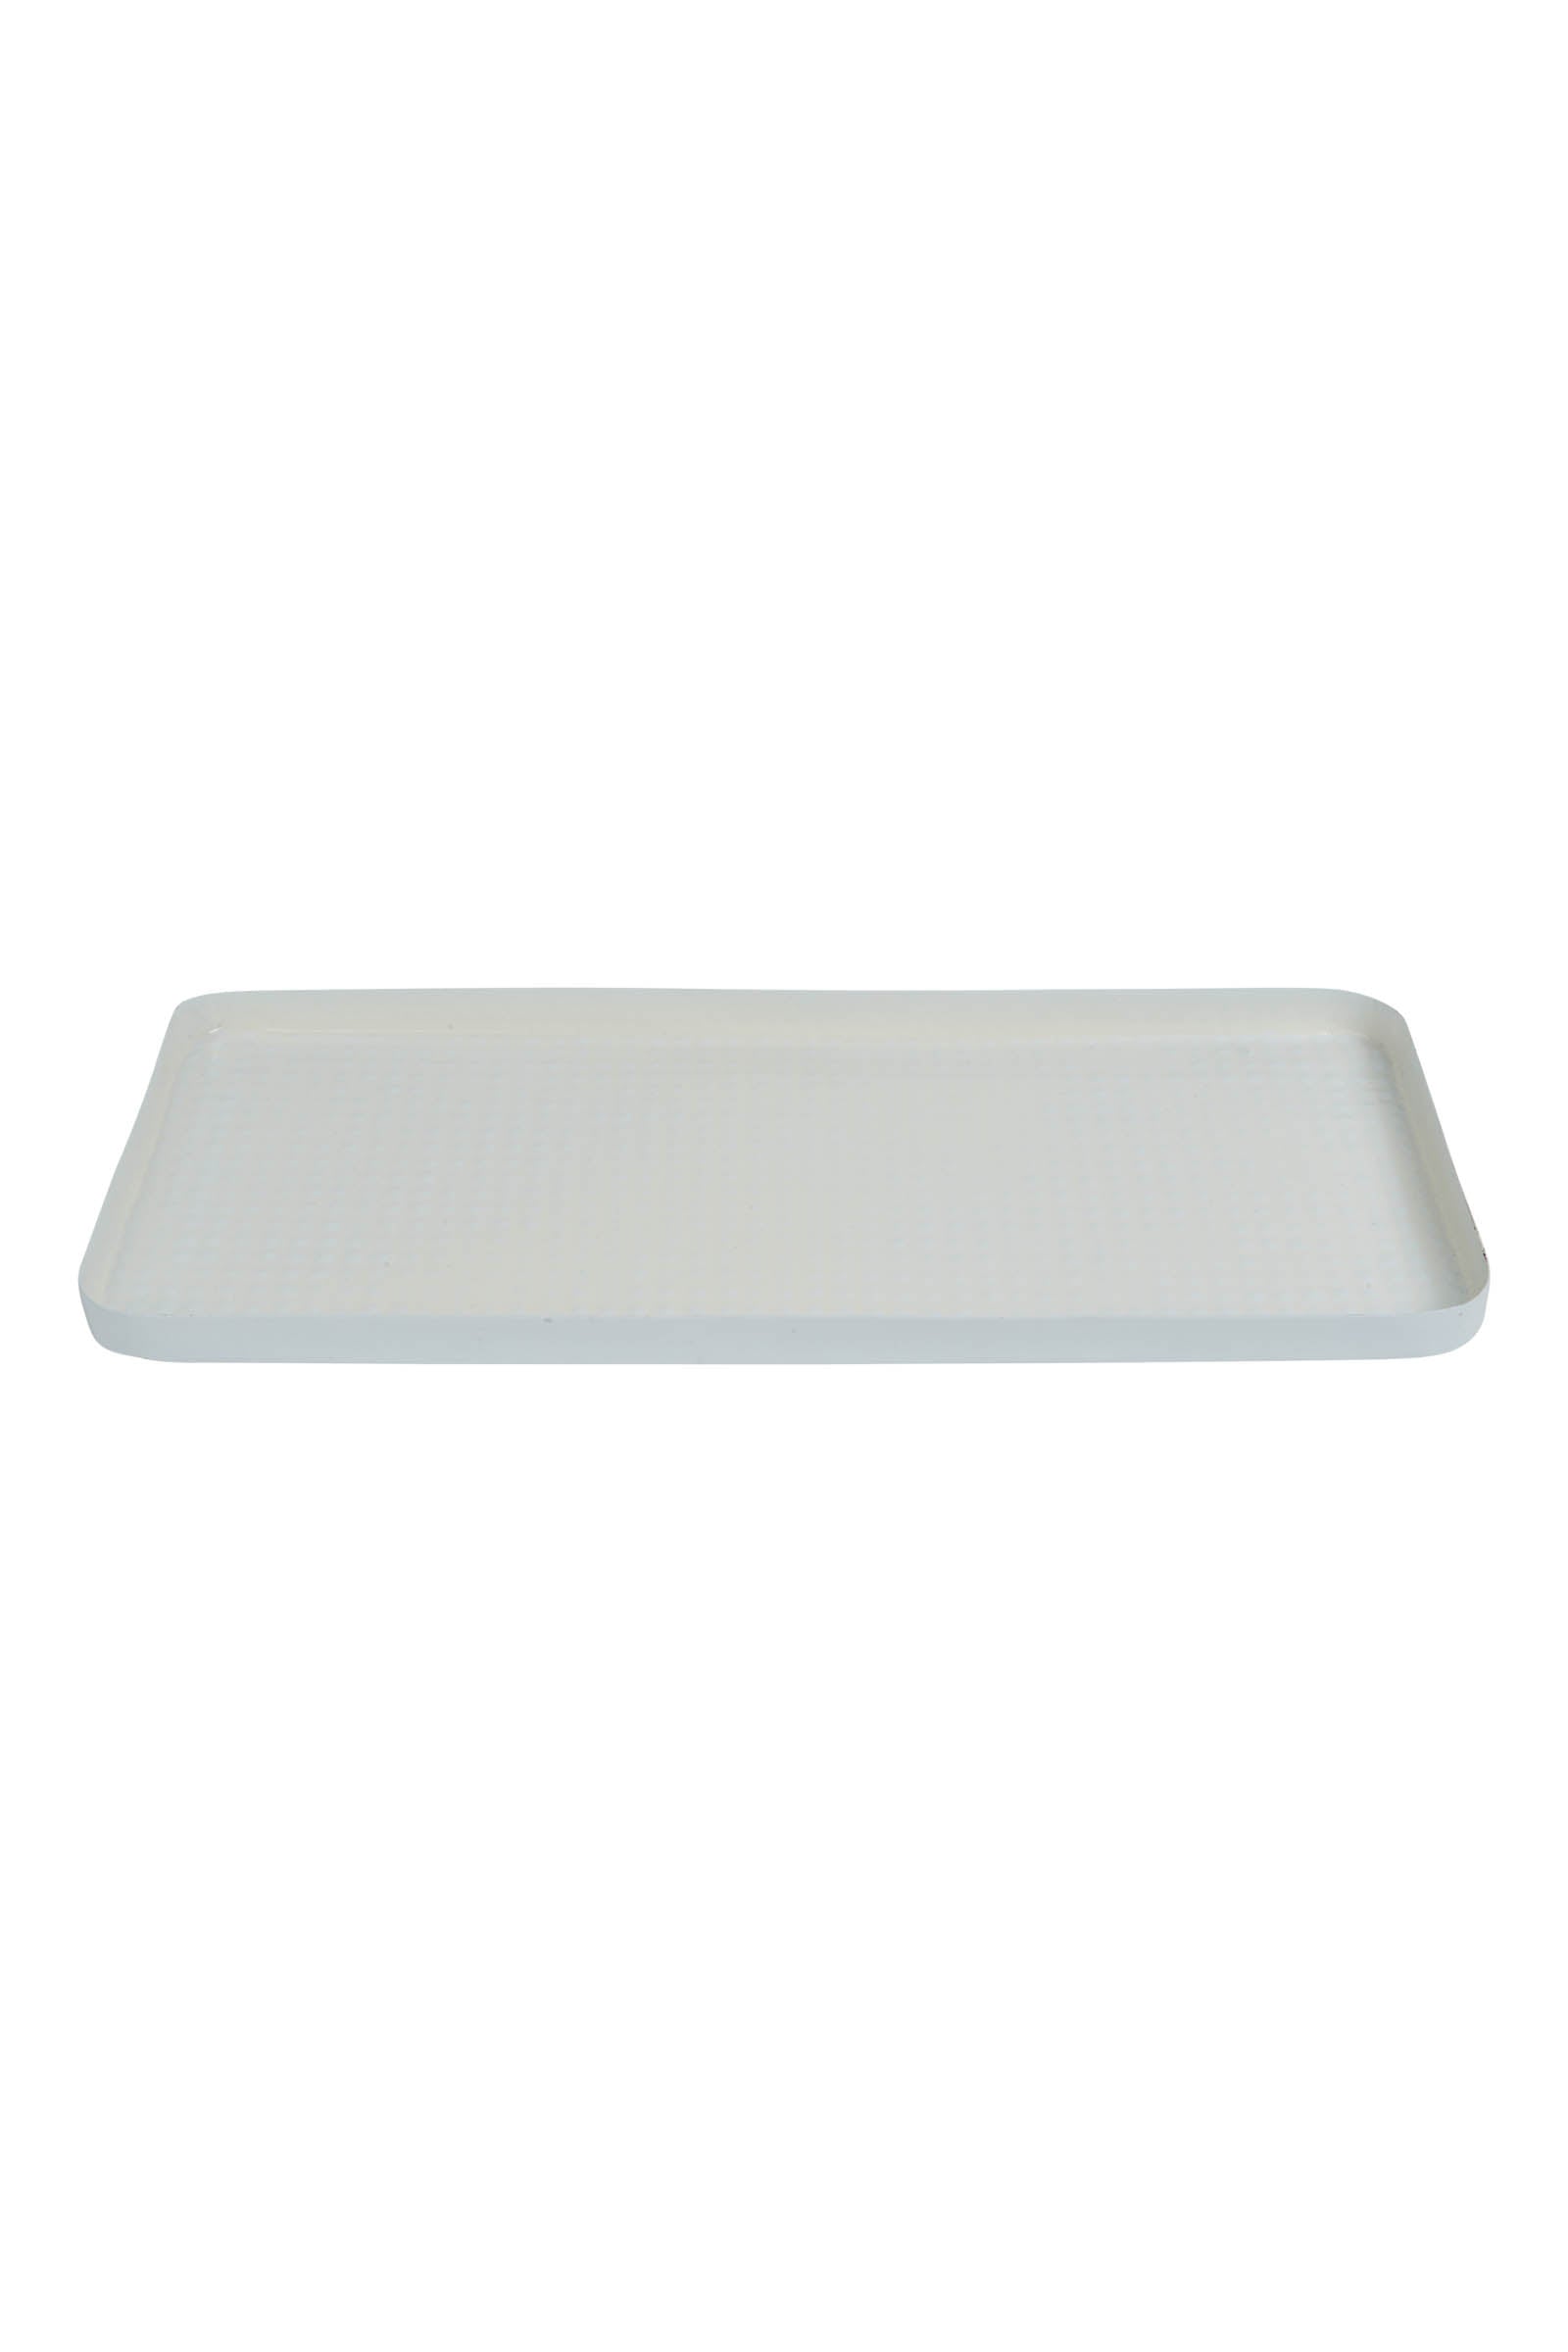 Esprit Platter - Blanc - eb&ive Table Top